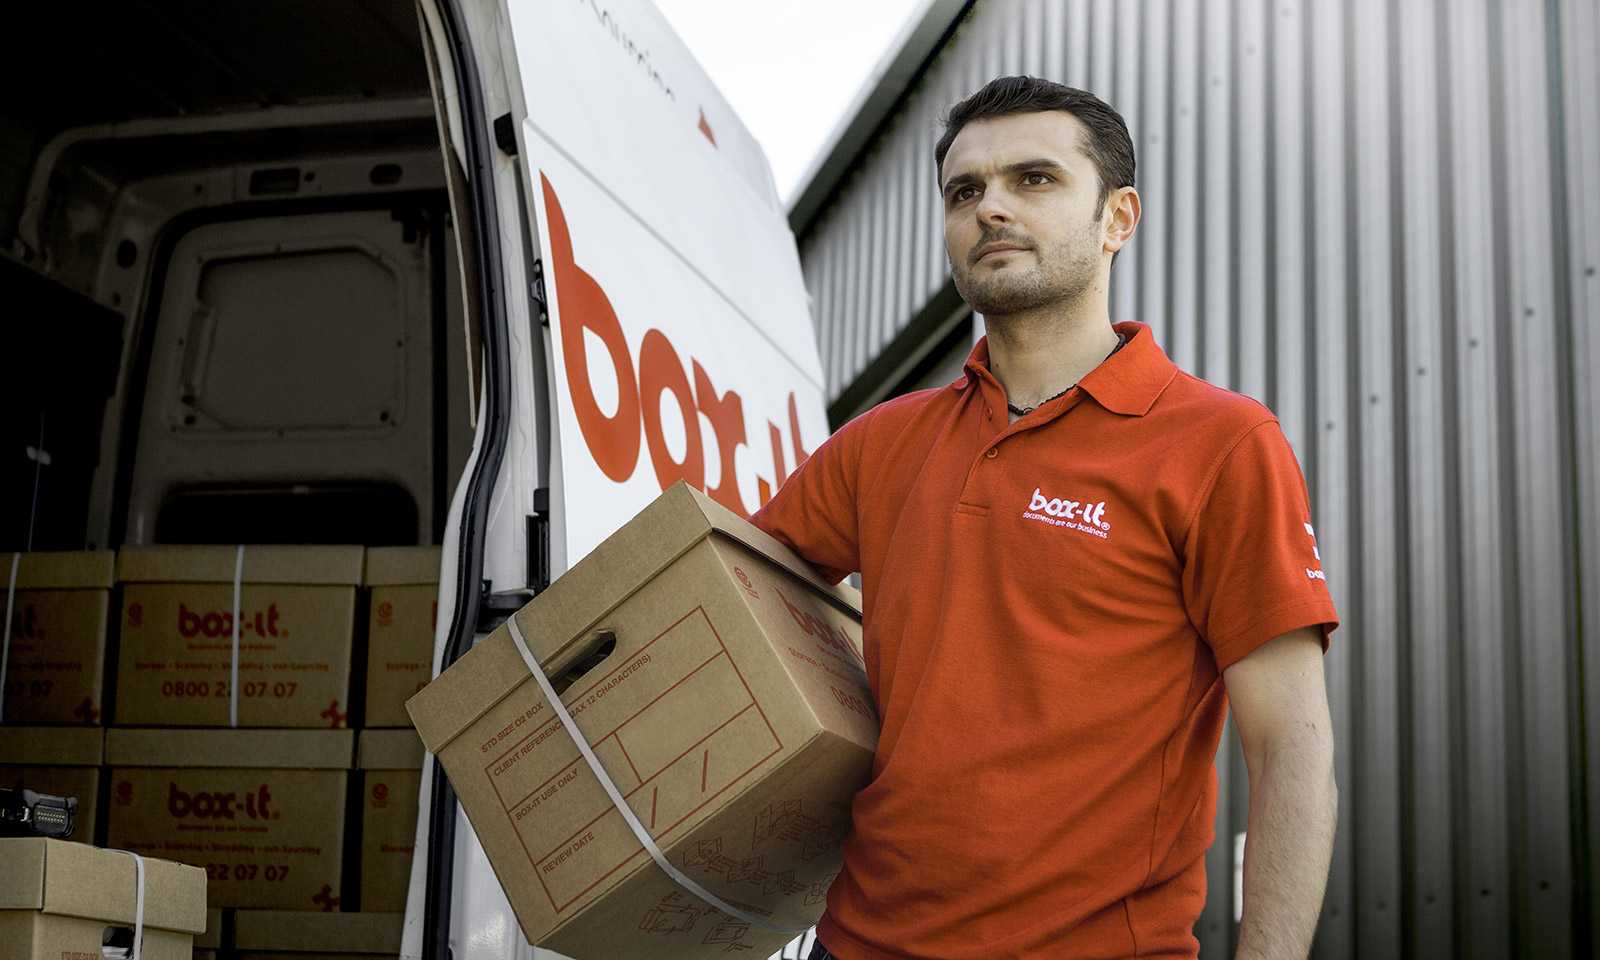 Box-it employee taking storage boxes into the van